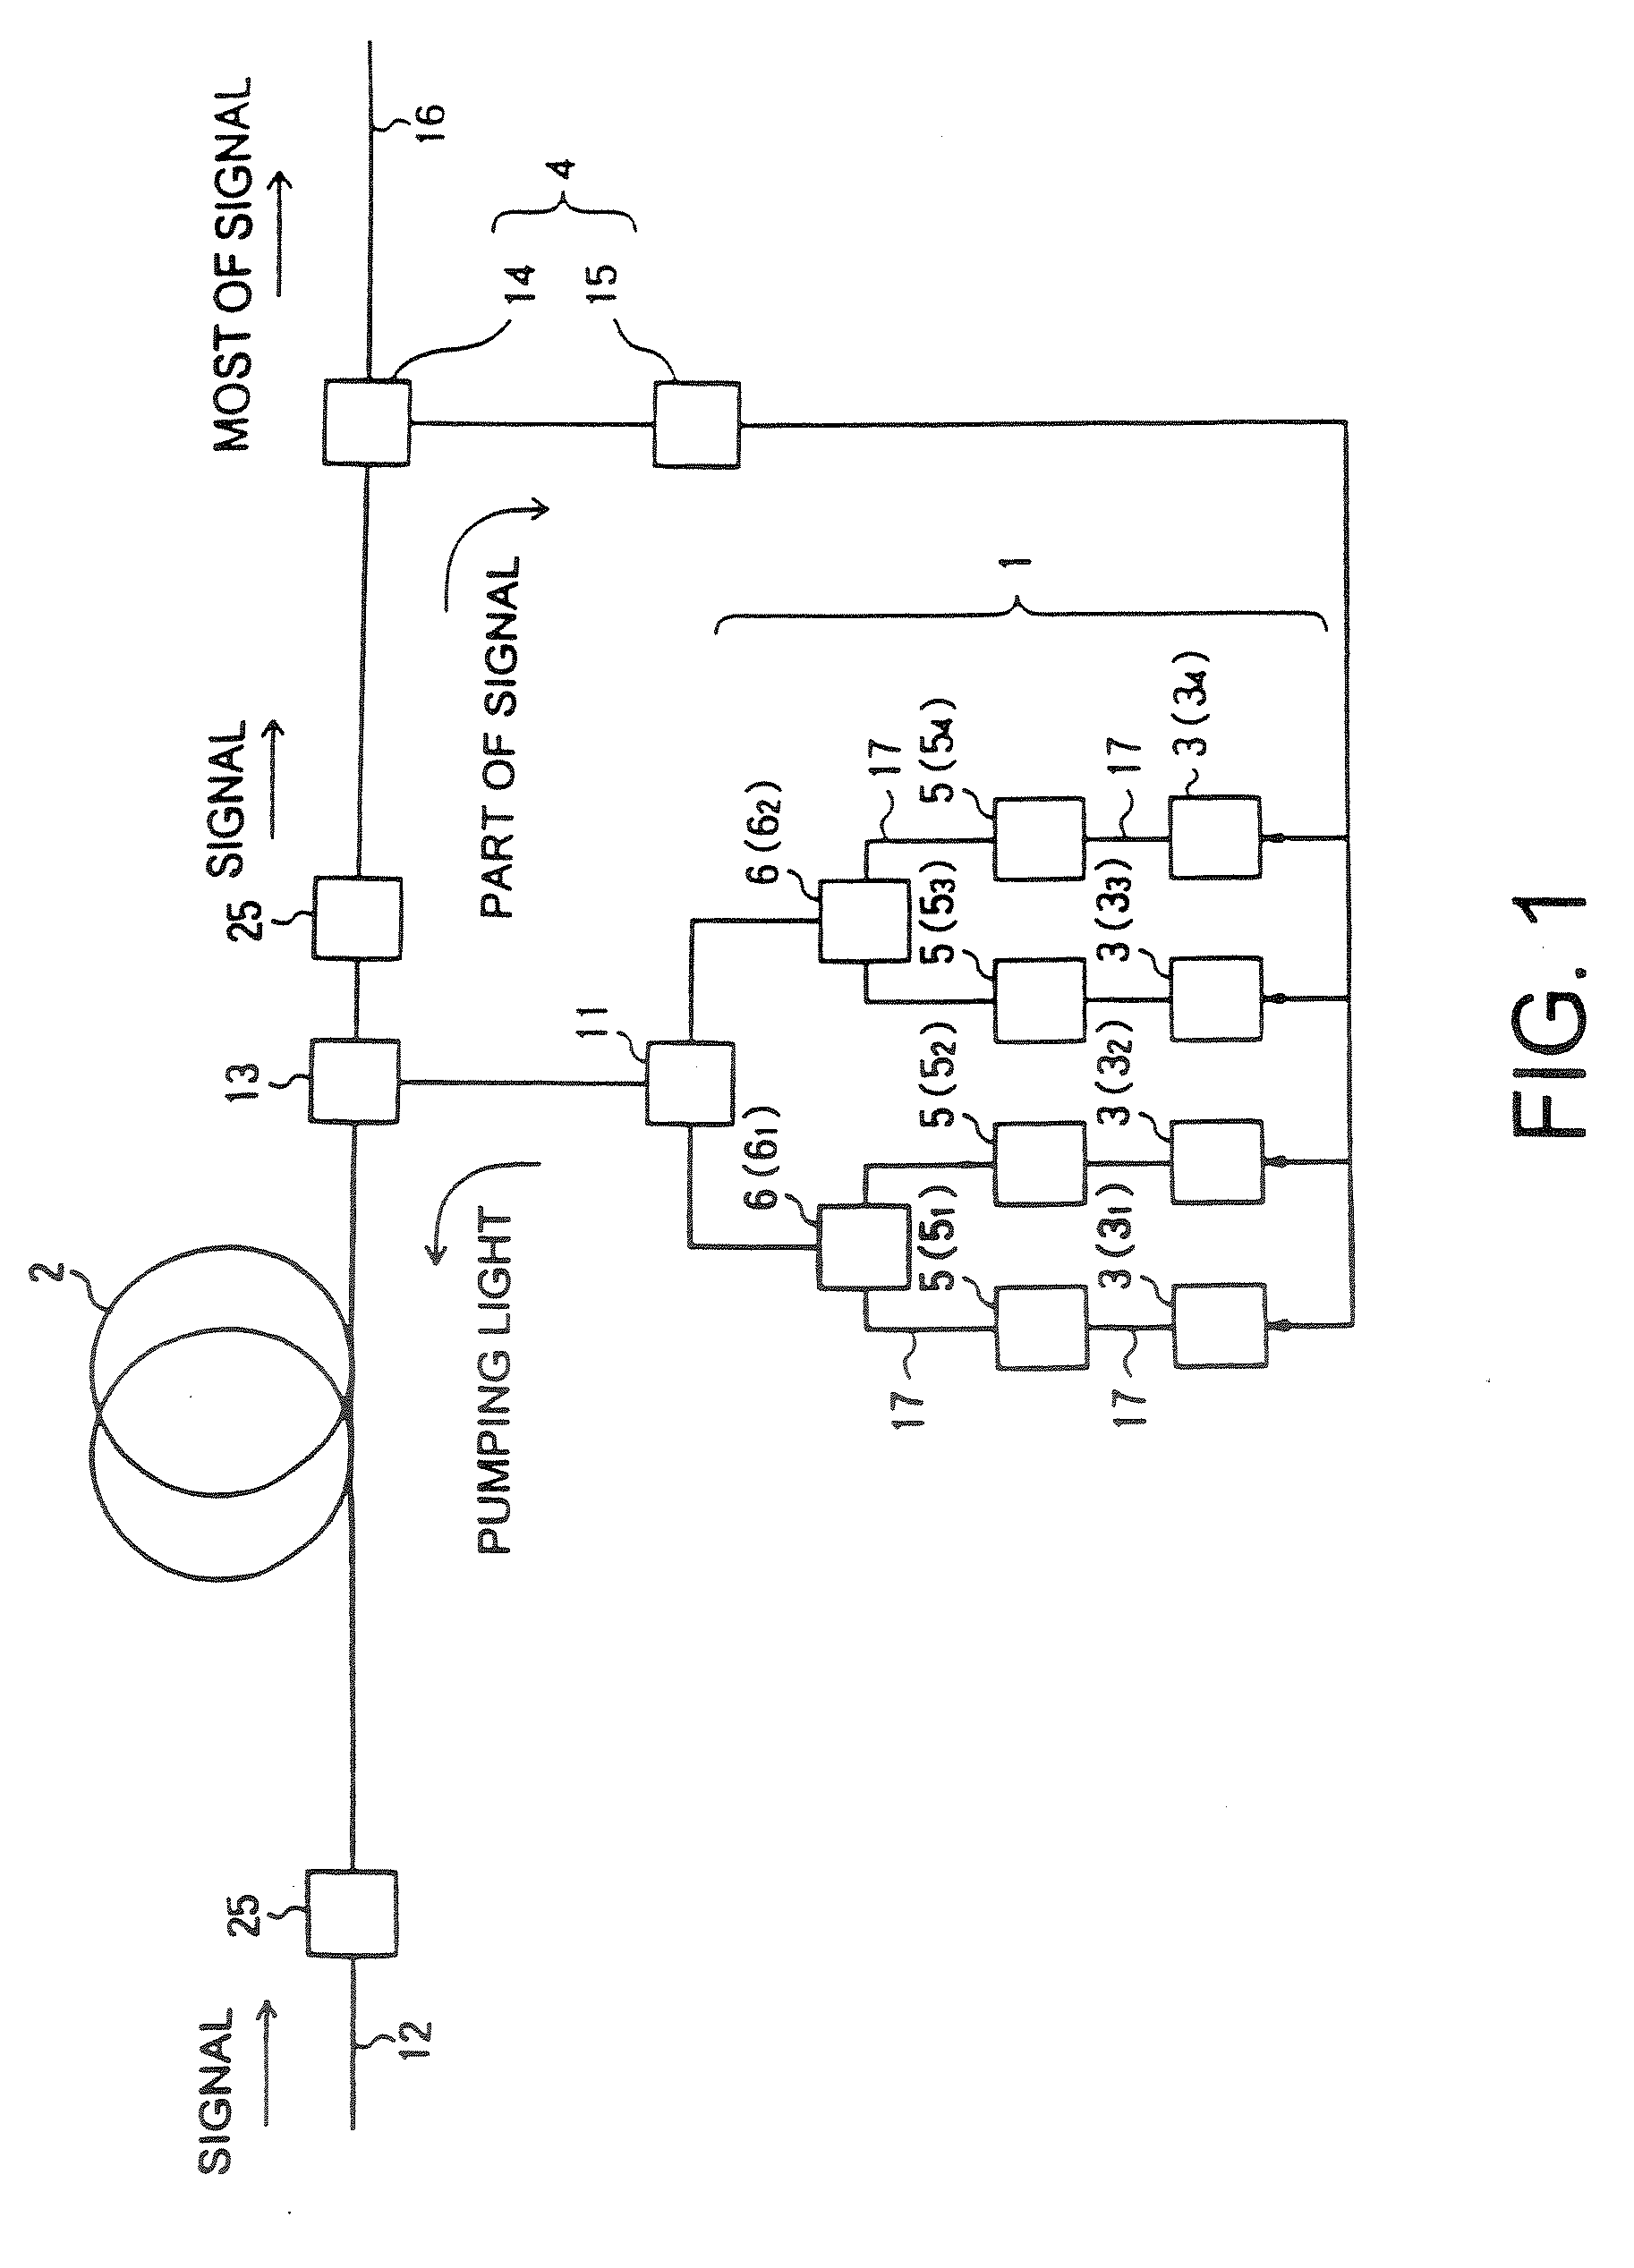 Raman amplifier, optical repeater, and raman amplification method